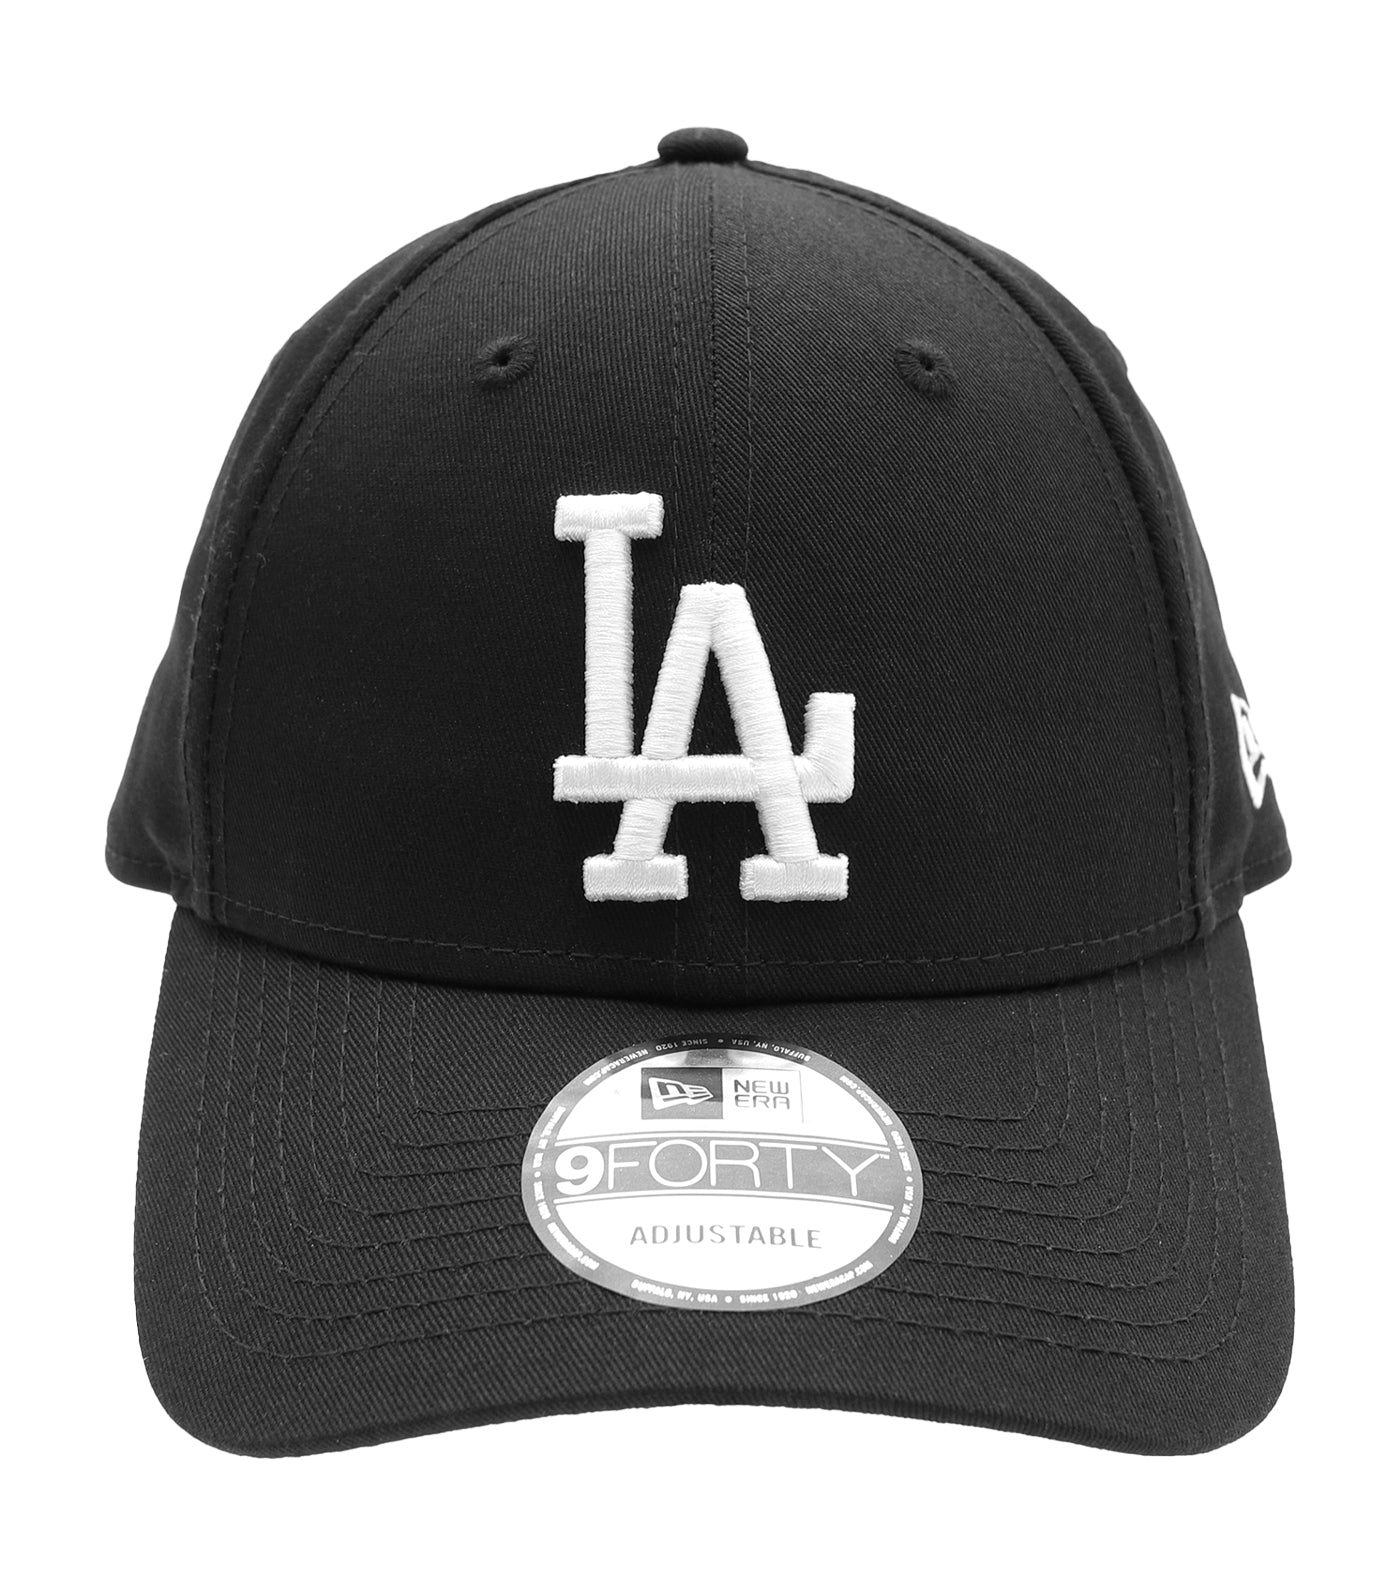 Los Angeles Dodgers 9Forty Cap Black